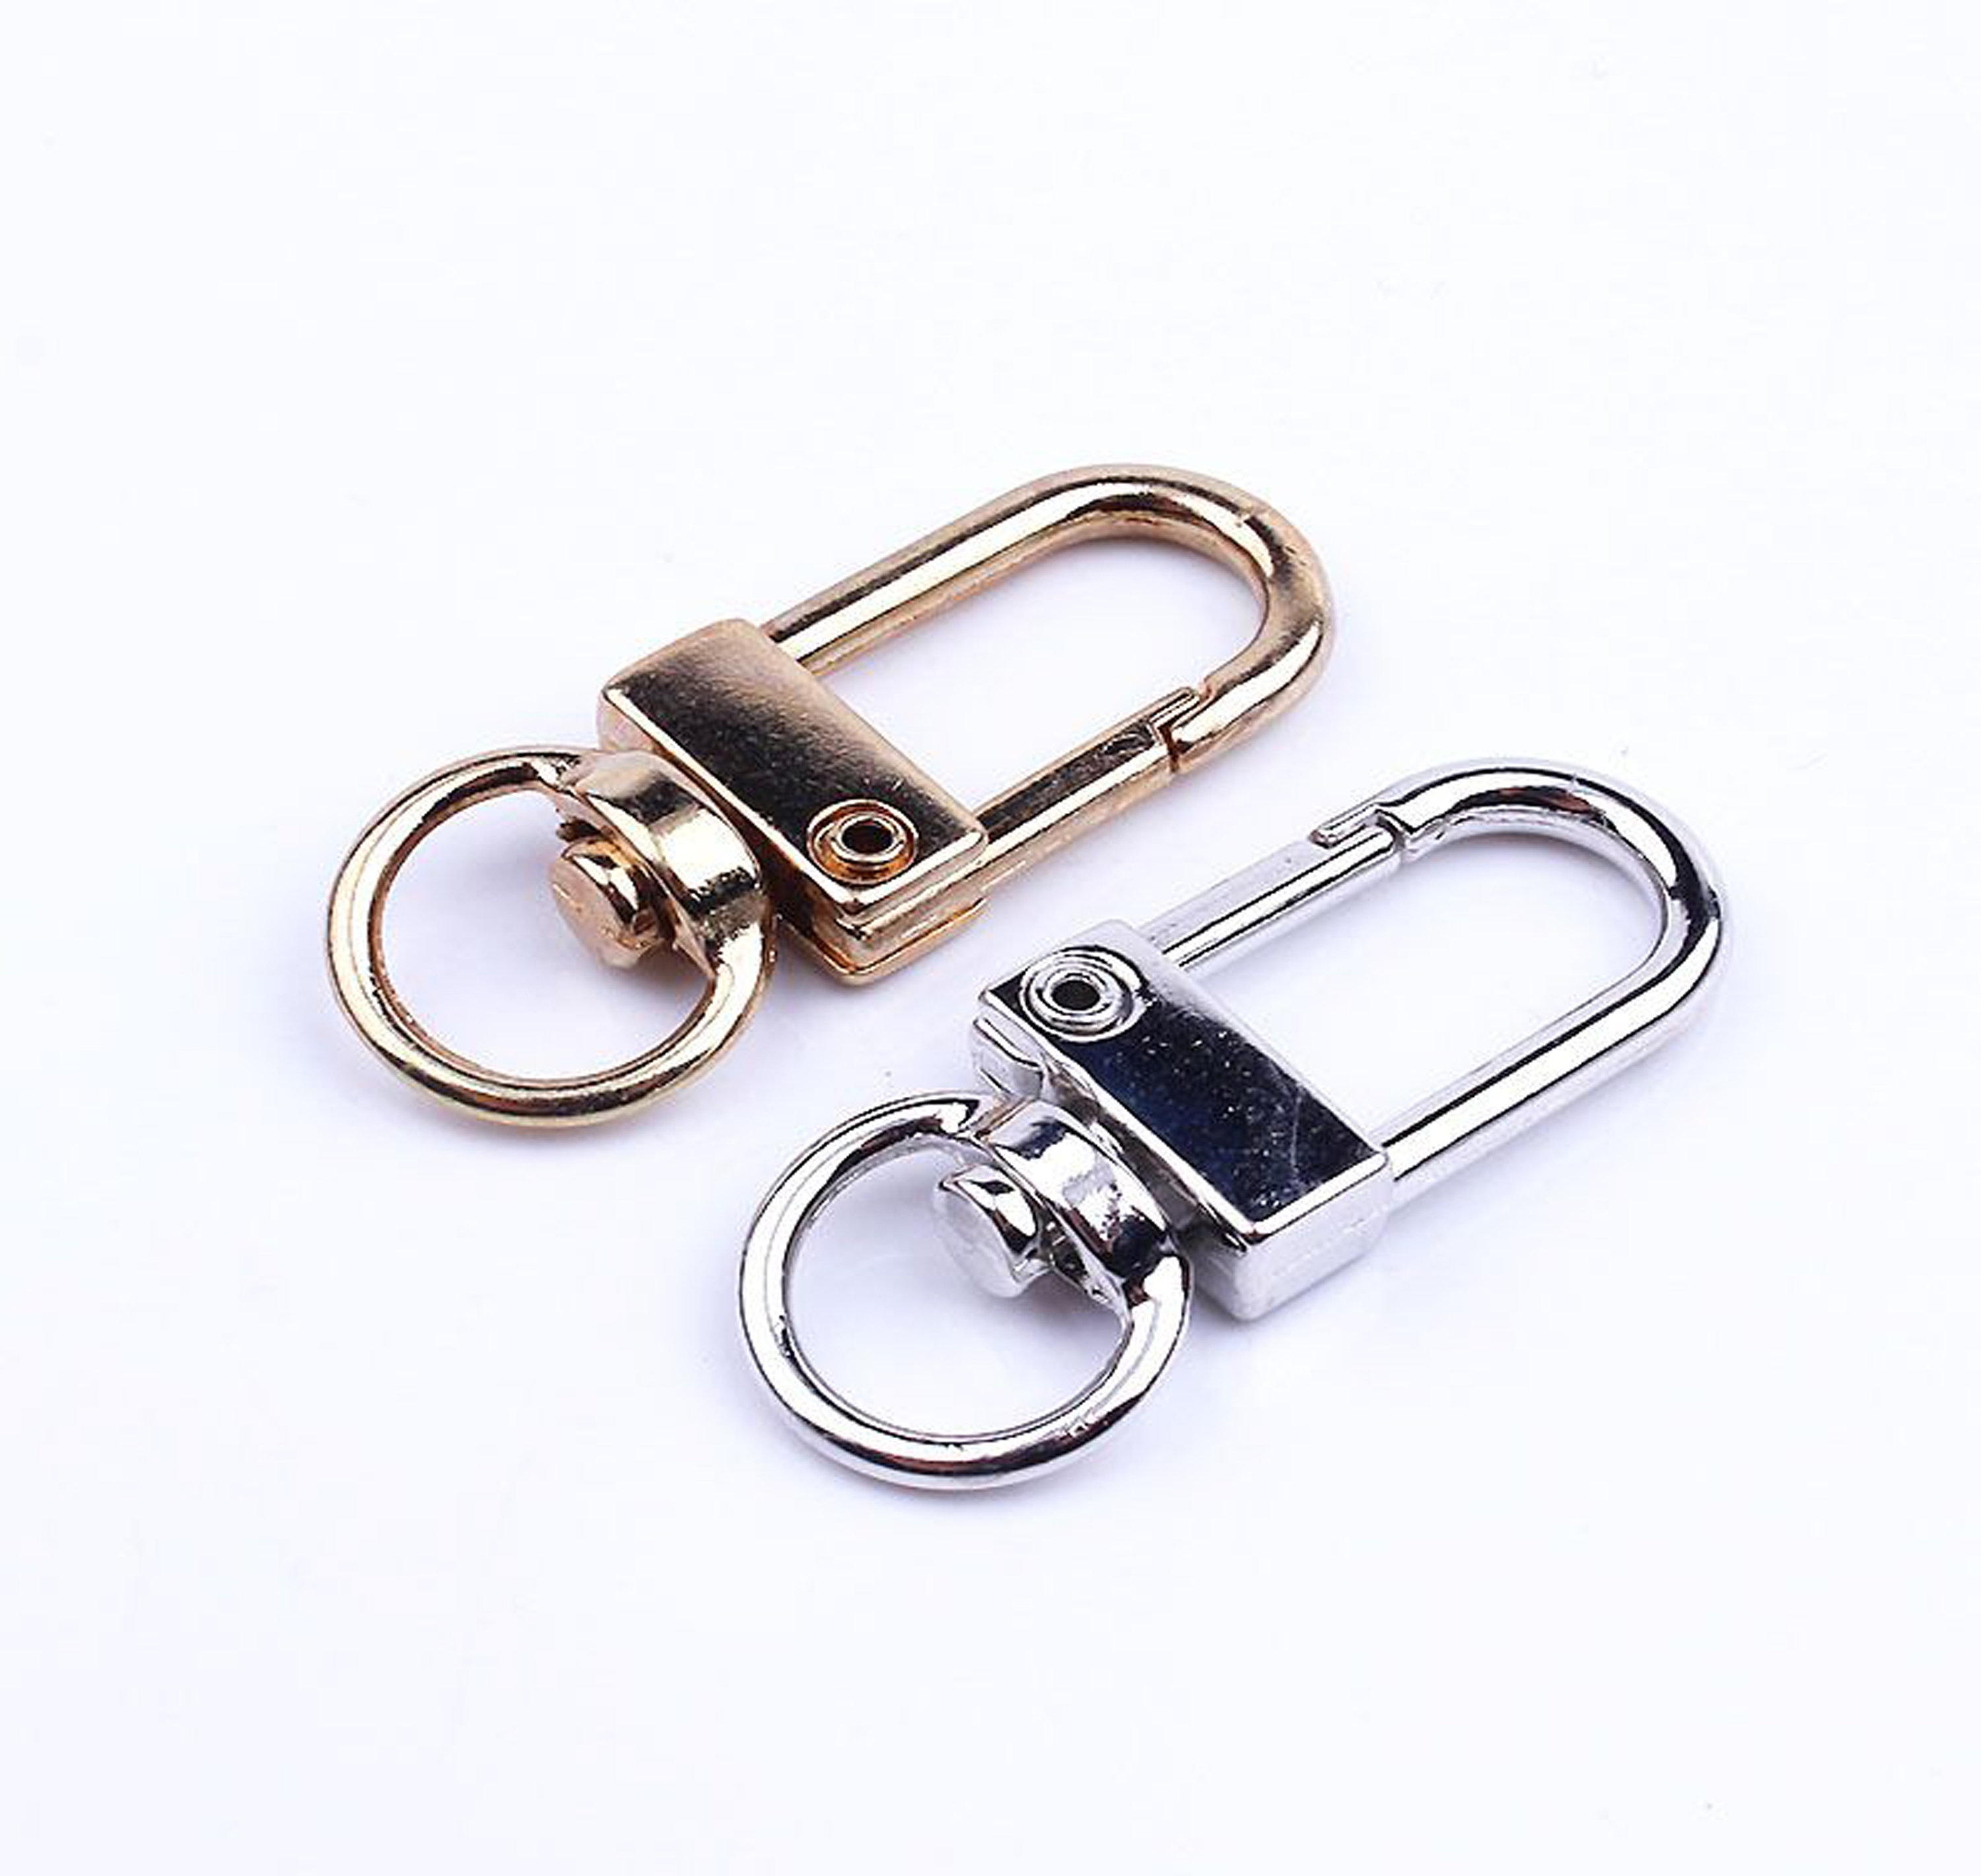 Silver Split Key Ring w/ Big Lobster Clasp & Swivel Ring (30mm x 68mm, MiniatureSweet, Kawaii Resin Crafts, Decoden Cabochons Supplies